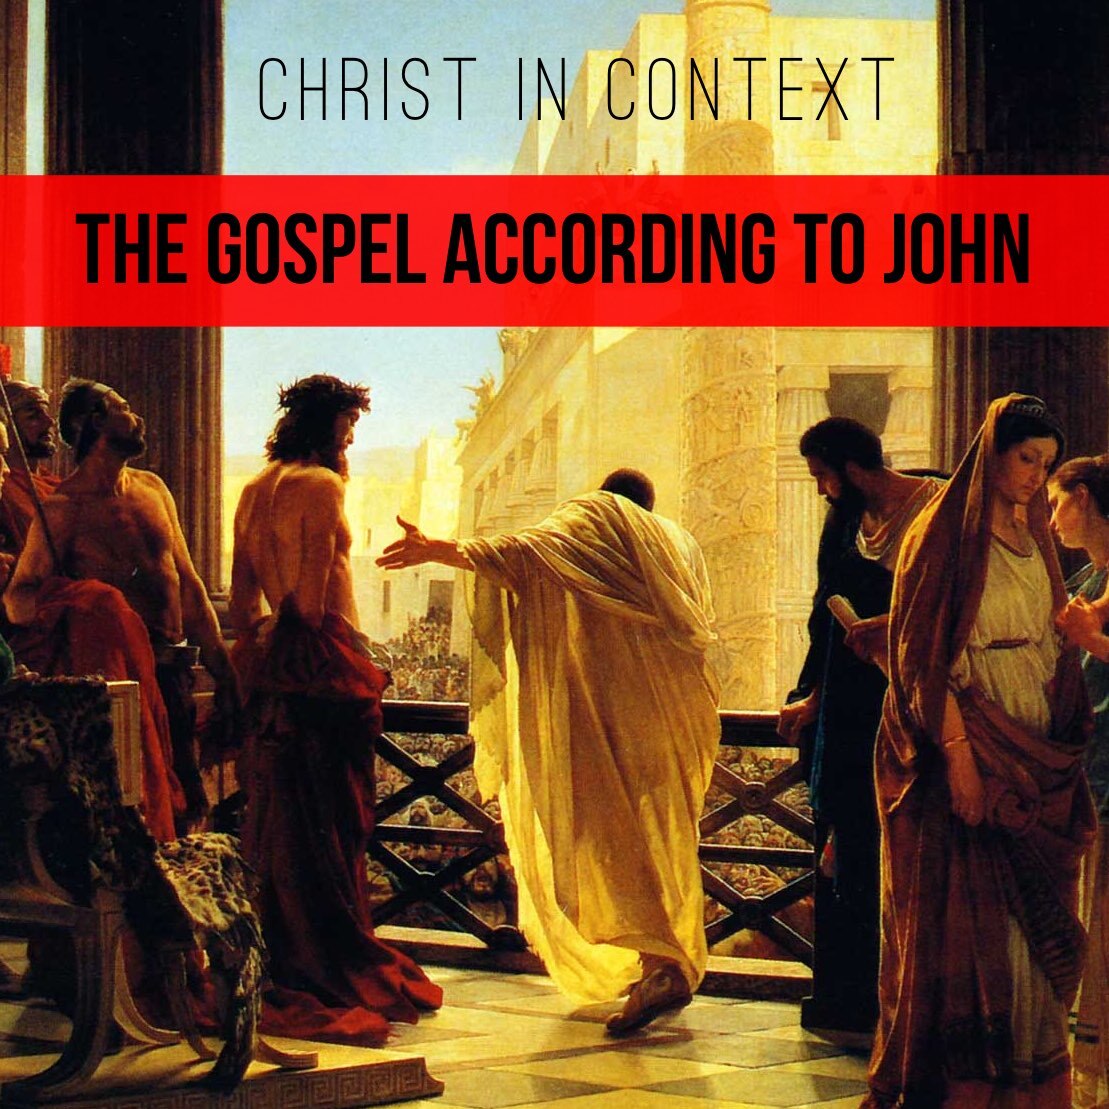 John the Baptist: 'I am not the Christ!' | John 1:19-34